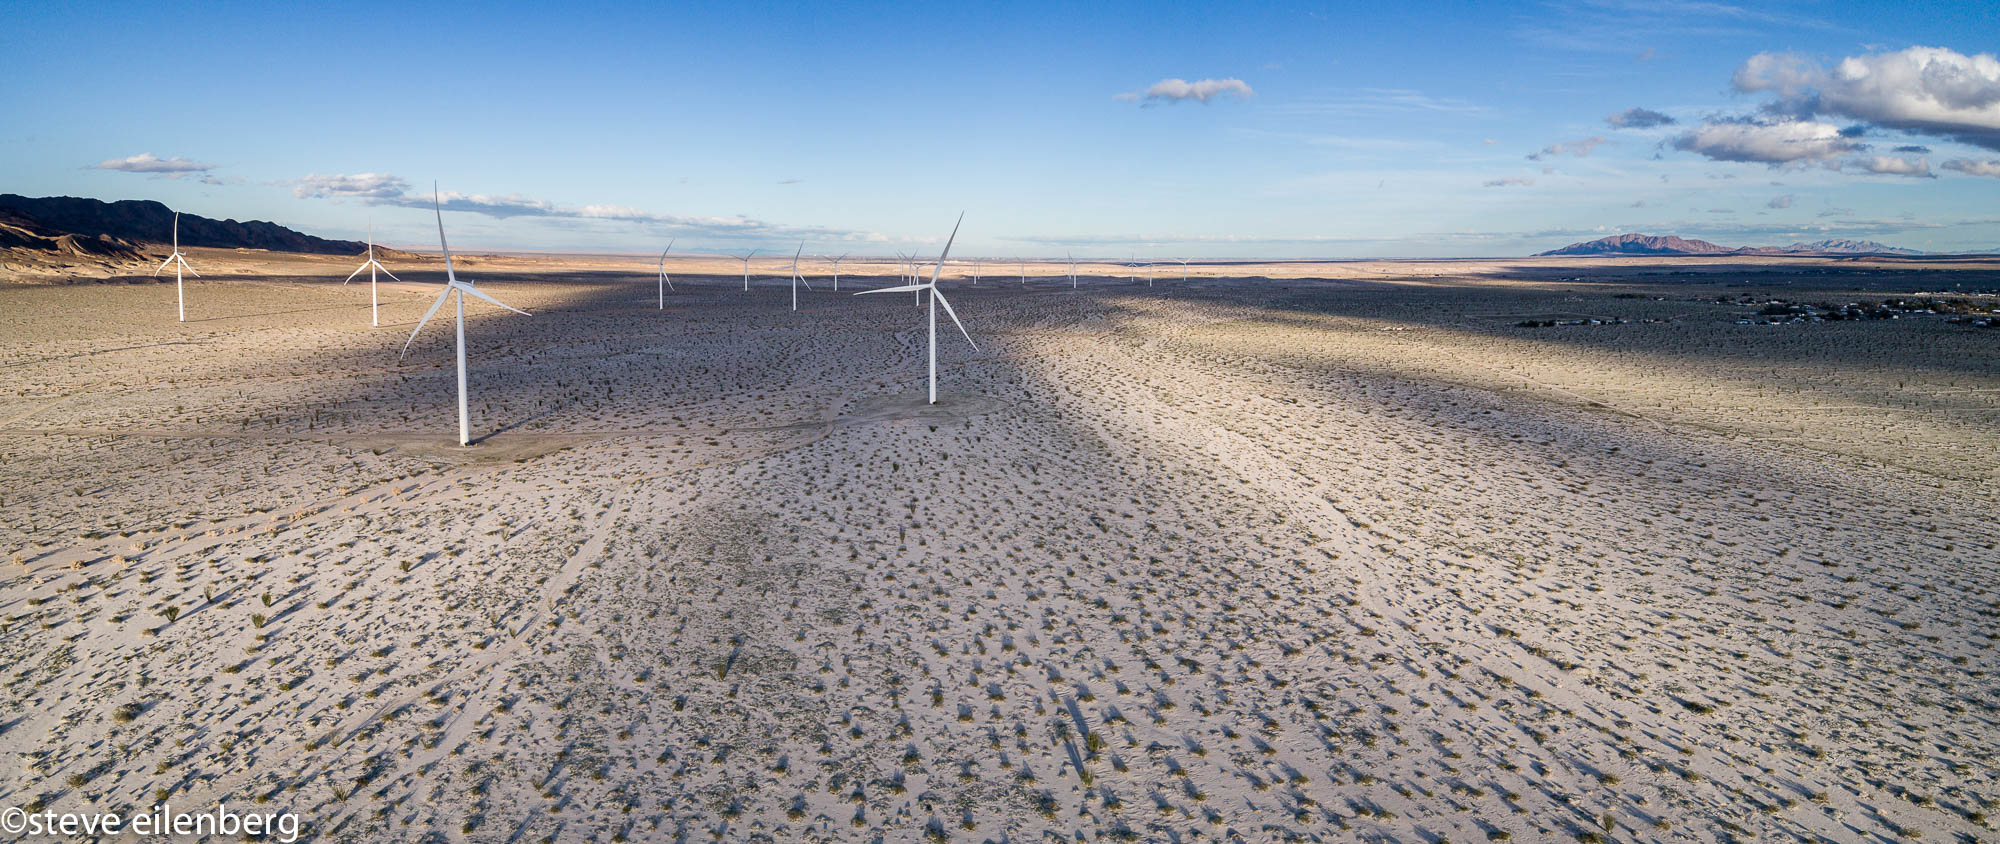 Wind turbines, Southern California